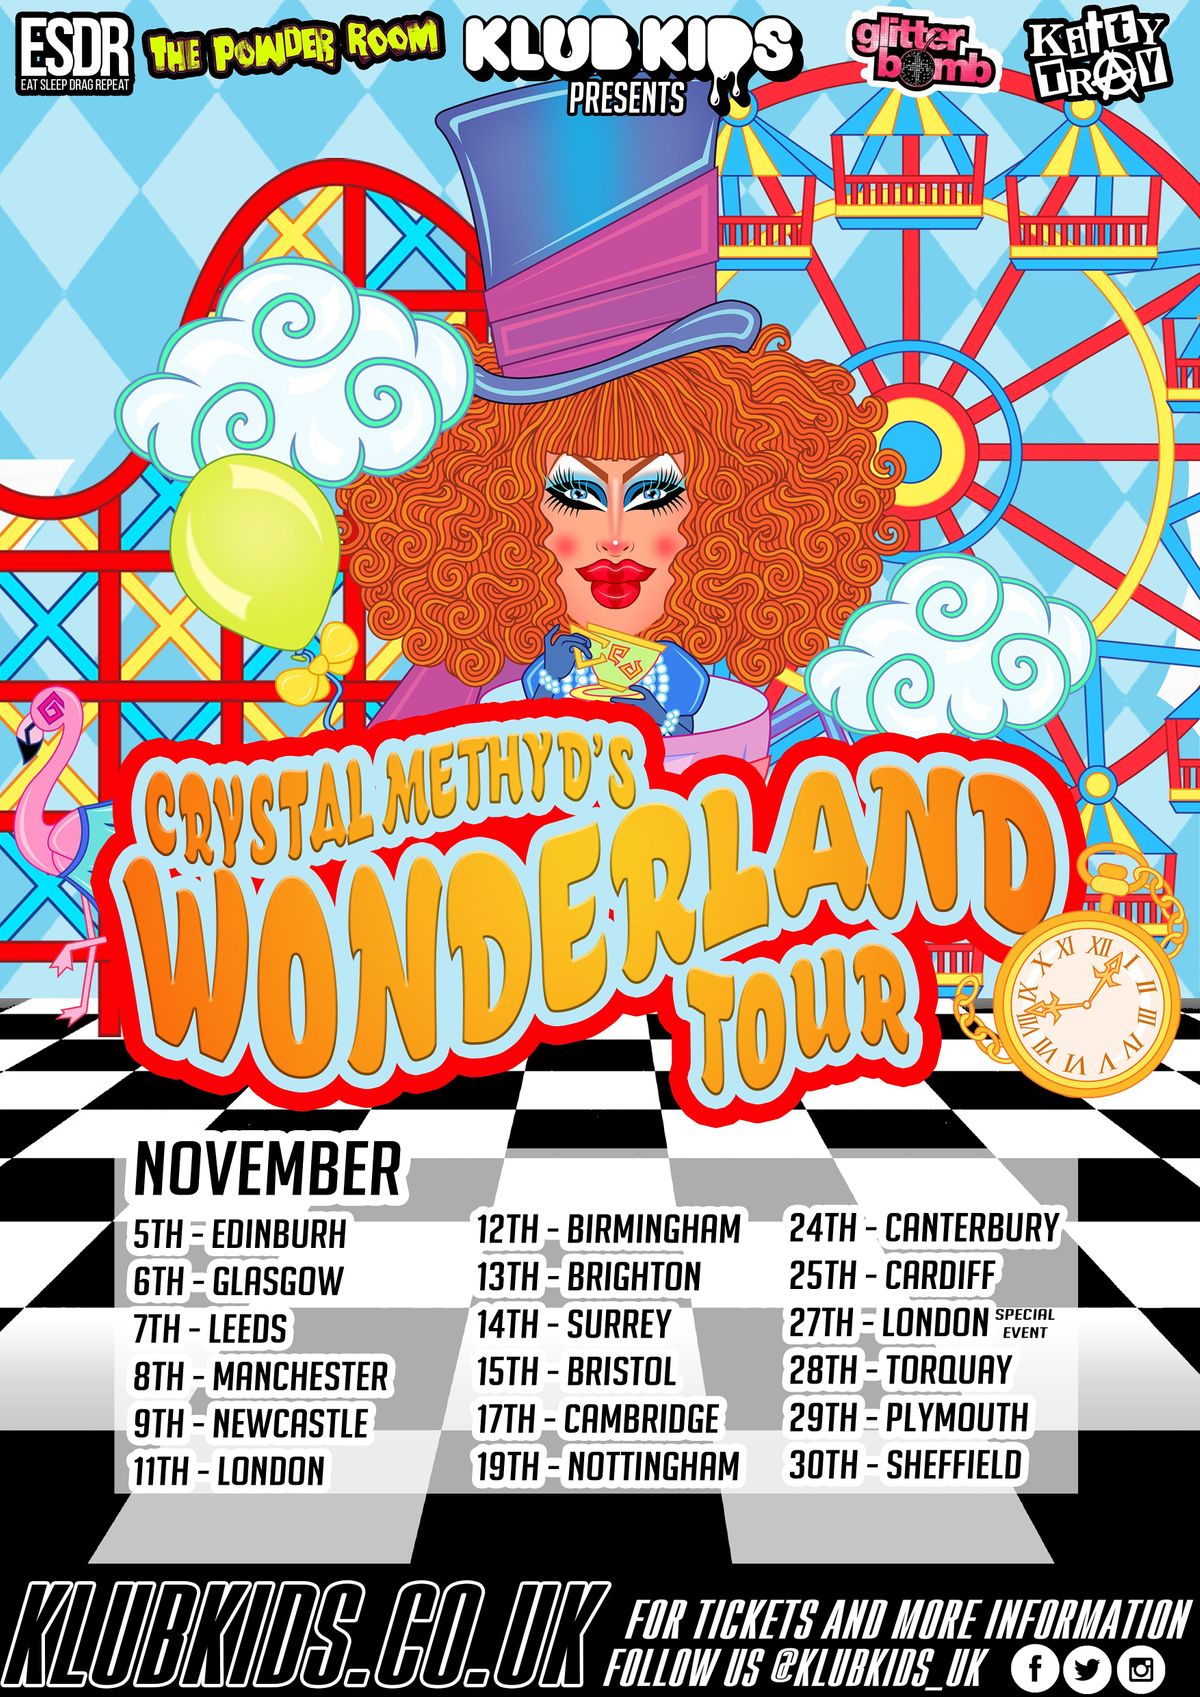 Klub Kids Manchester presents CRYSTAL METHYD'S Wonderland